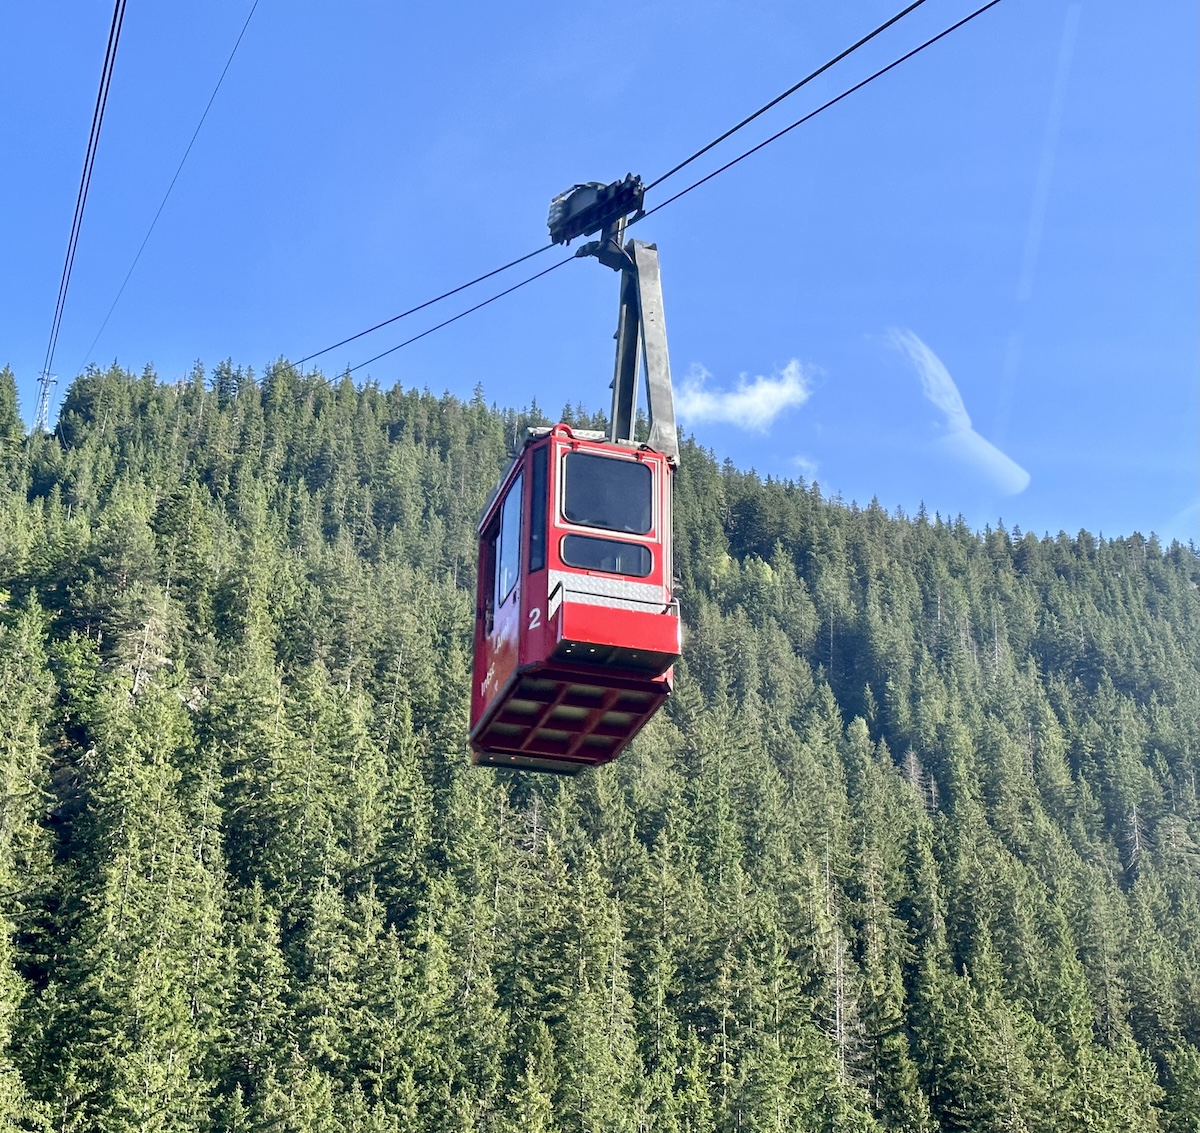 Intschi-Arnisee gondola in the canton of Uri, Switzerland